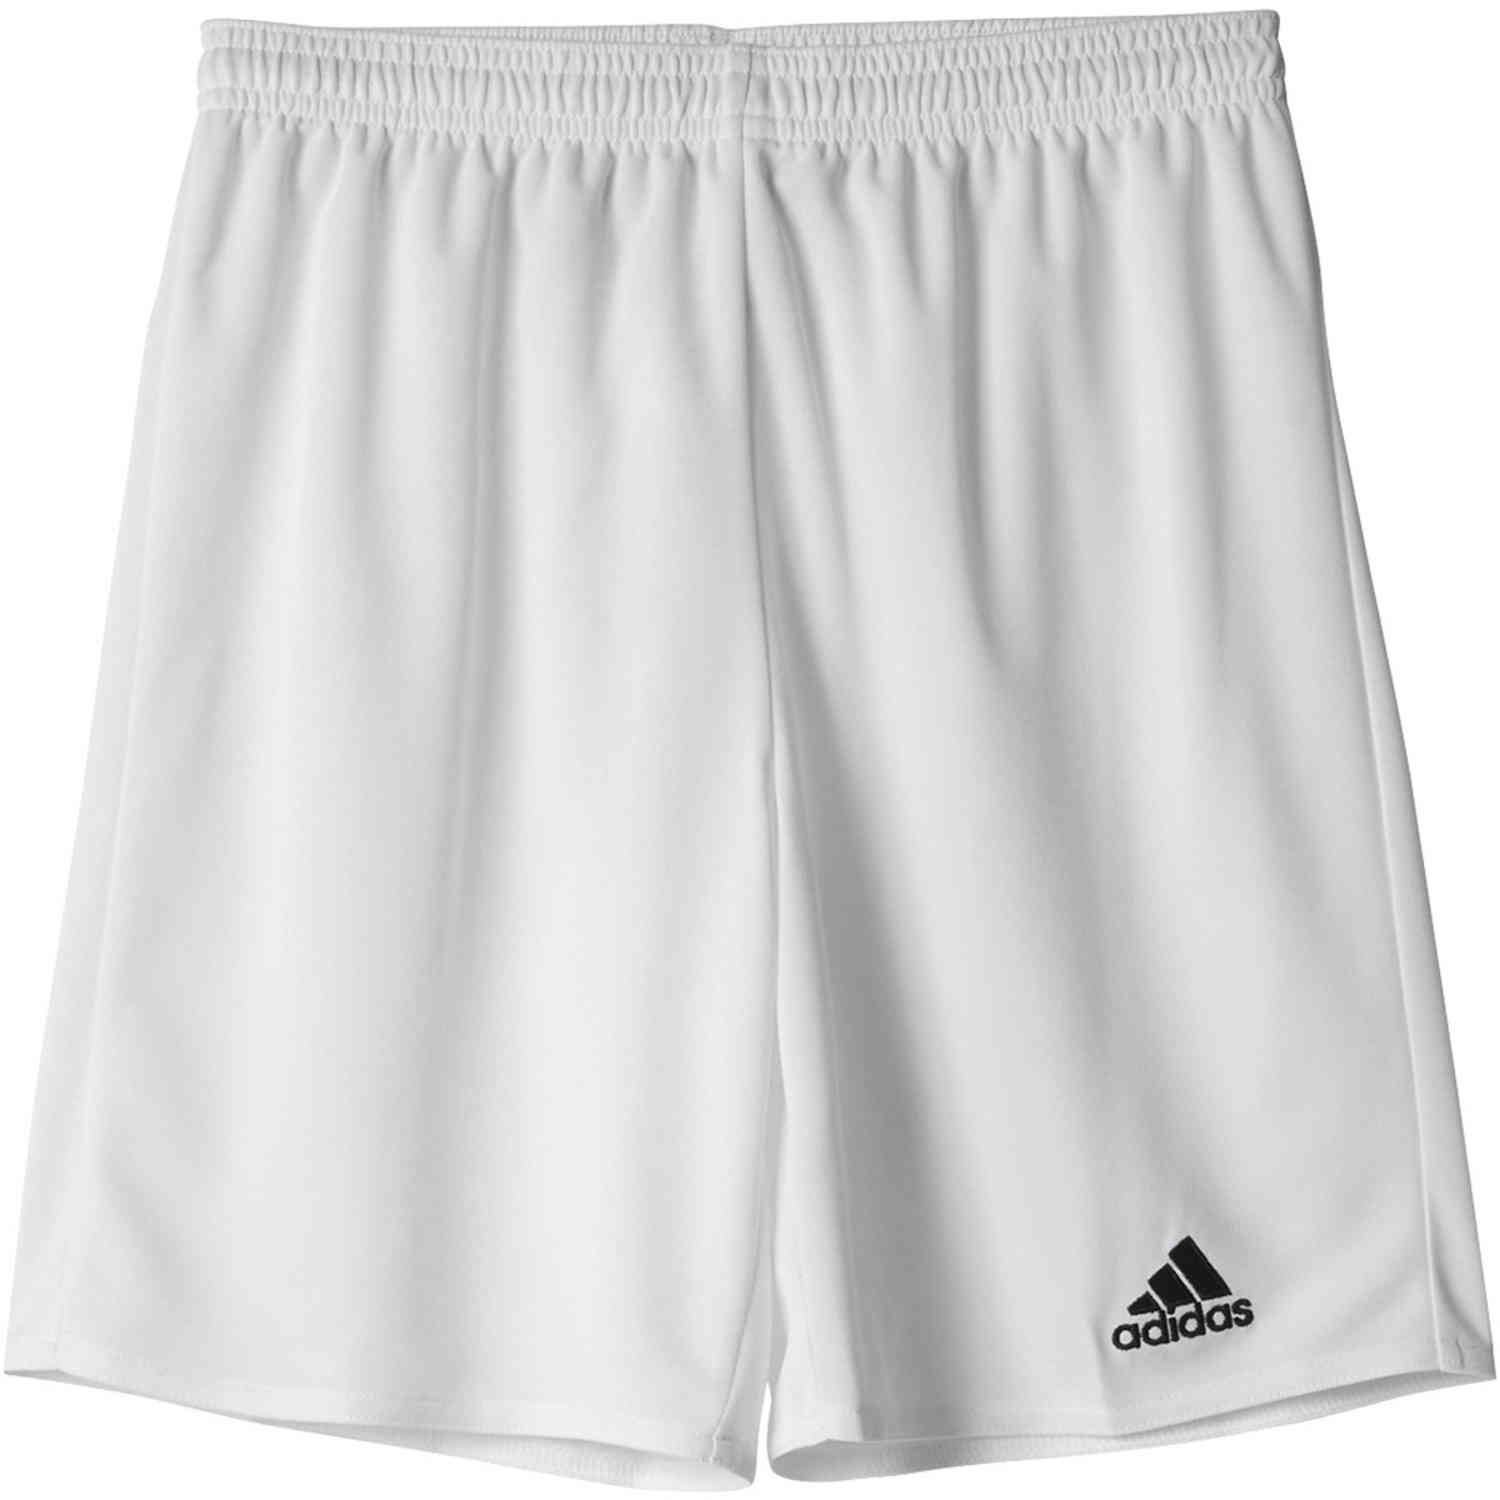 Kids adidas Parma 16 Shorts - White - SoccerPro